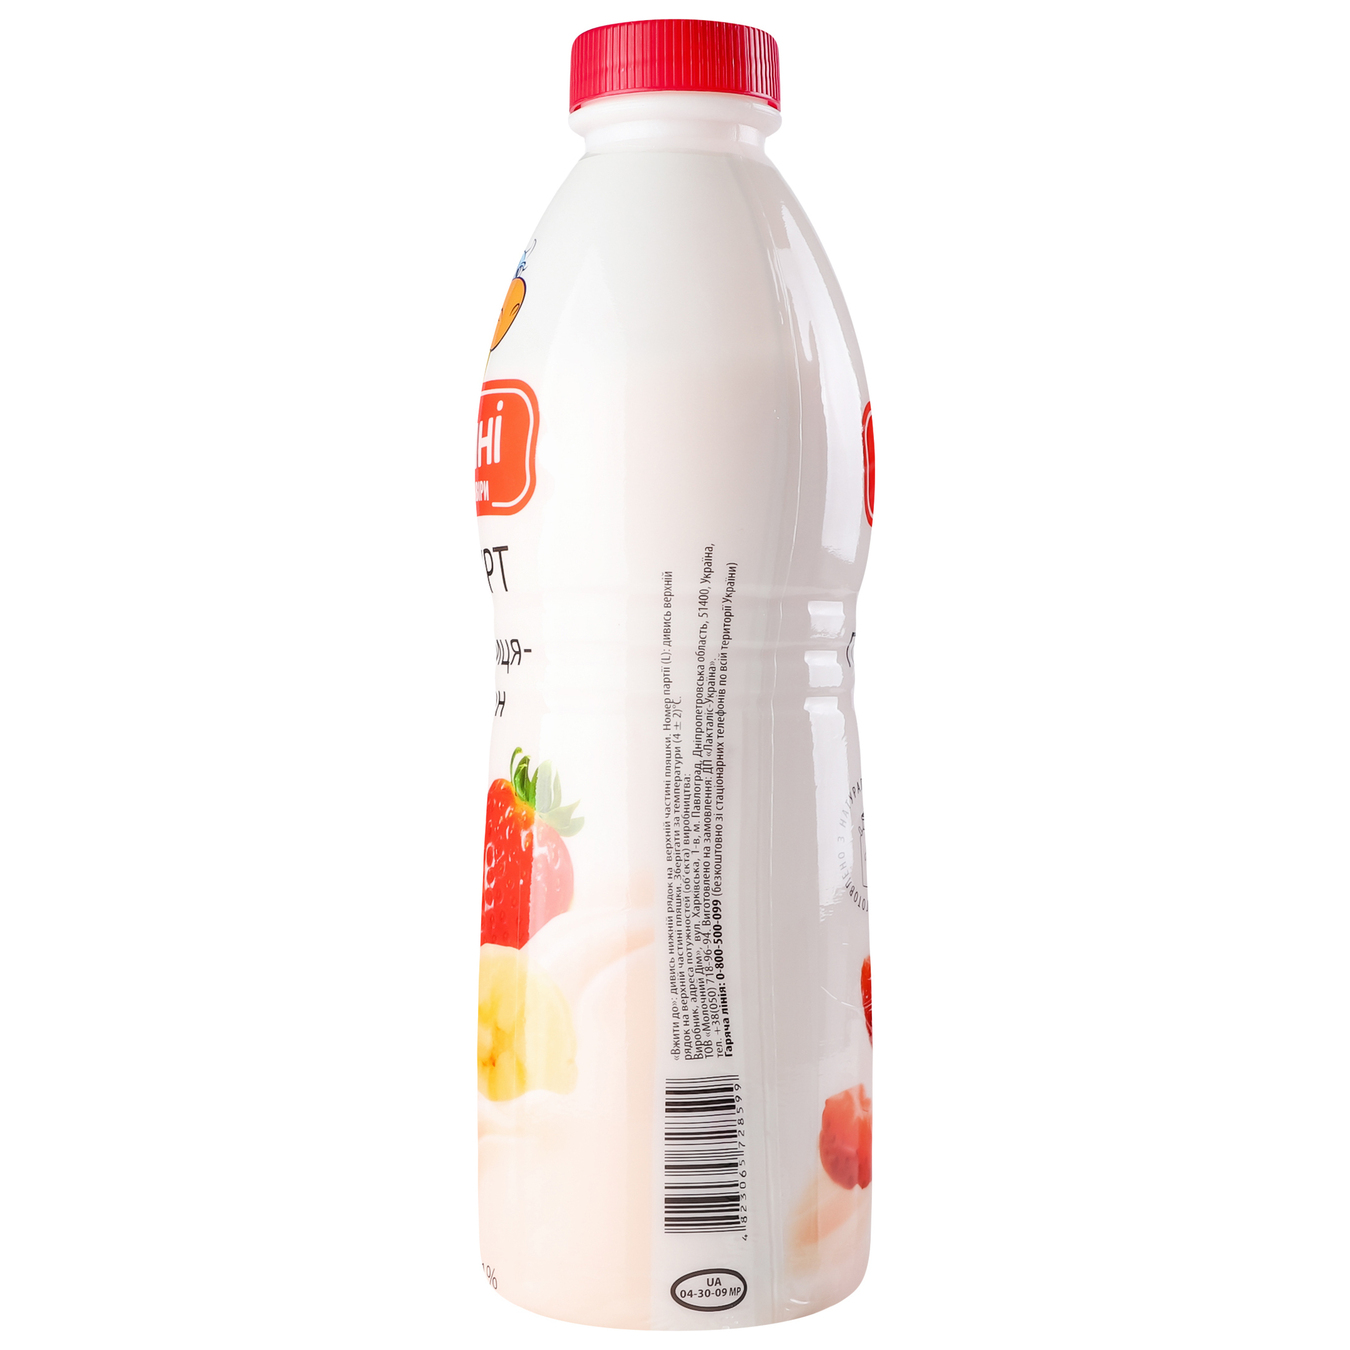 Fanny yogurt with strawberry-banana filling drinking bottle 1% 750g 4